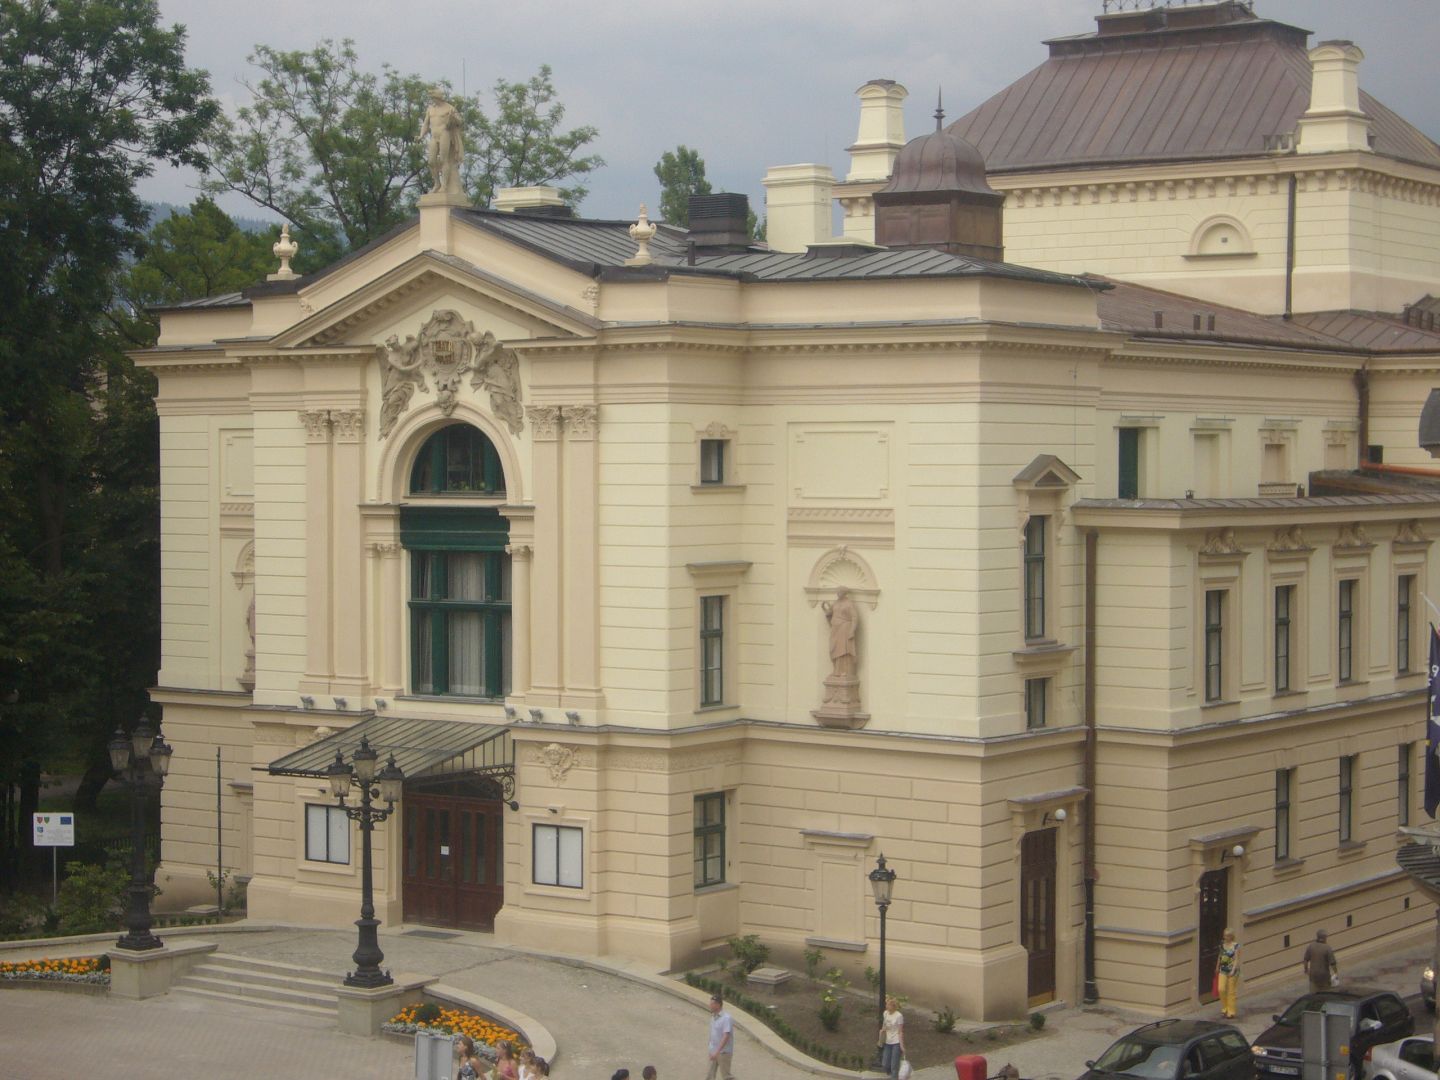 Building of the Polish Theater in Bielsko-Biała